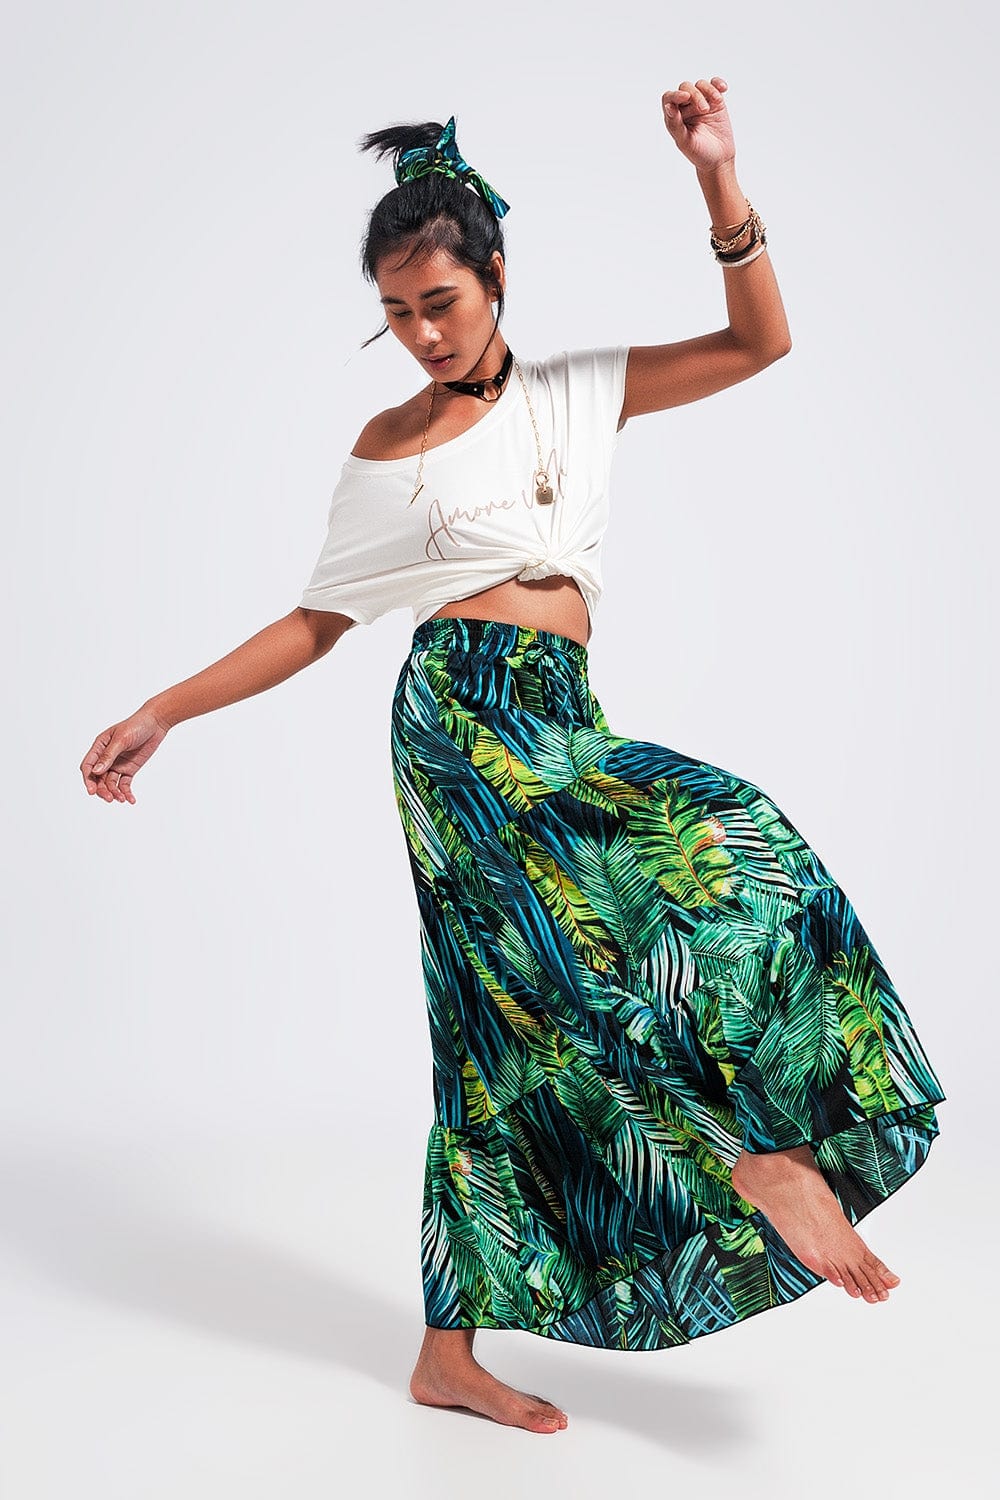 Q2 Women's Skirt Maxi Tiered Skirt in Green Tropical Print